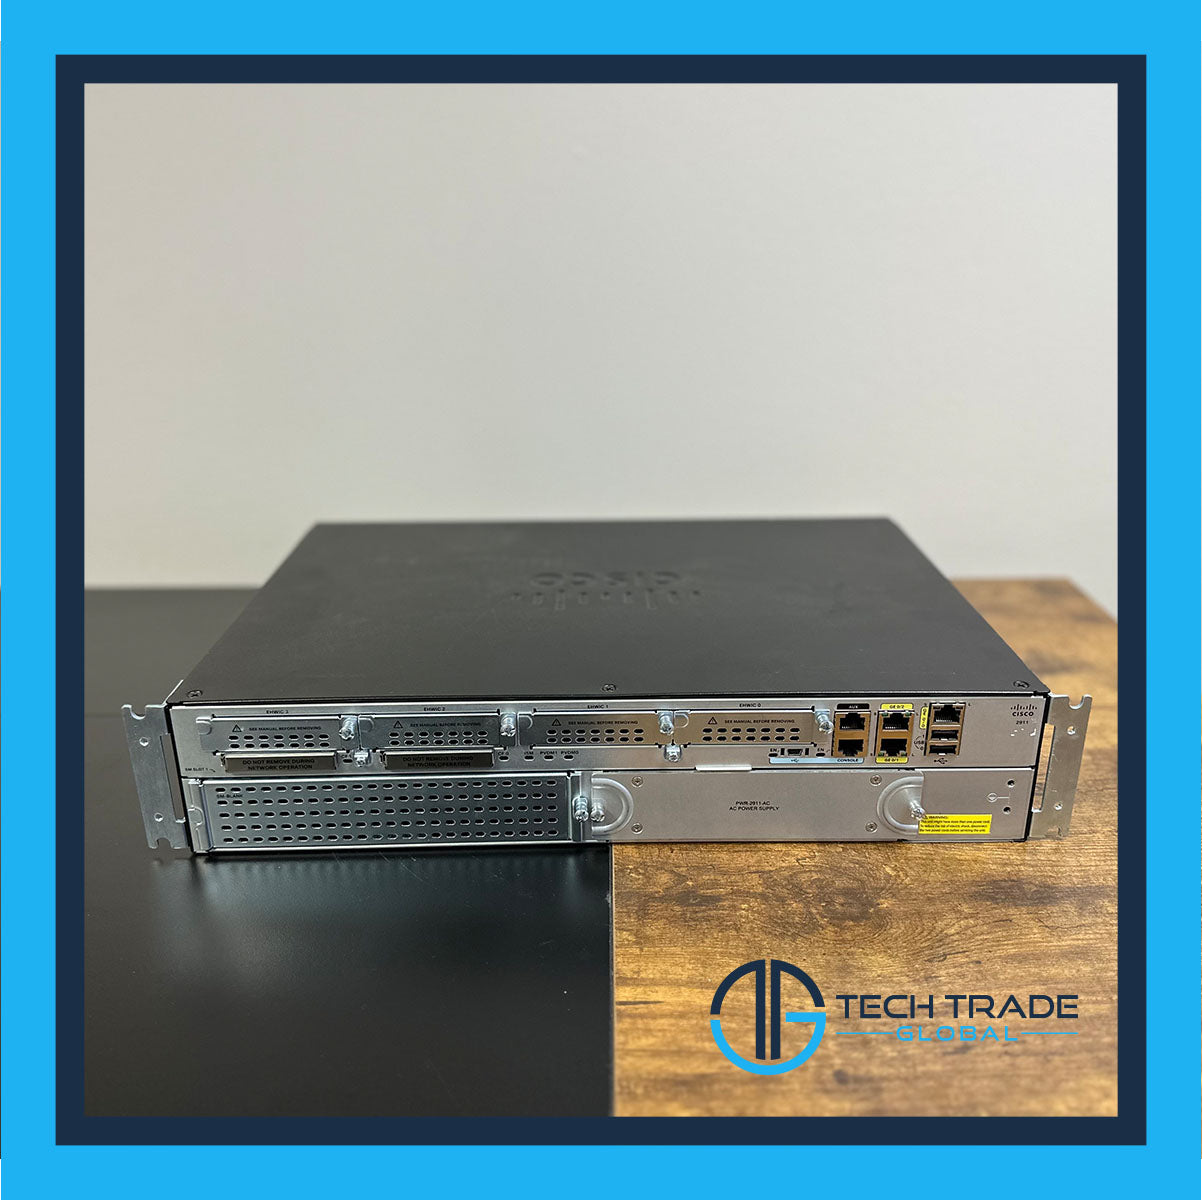 C2911-CME-SRST/K9 |  Cisco 2911 Integrated Service Router 2911/K9